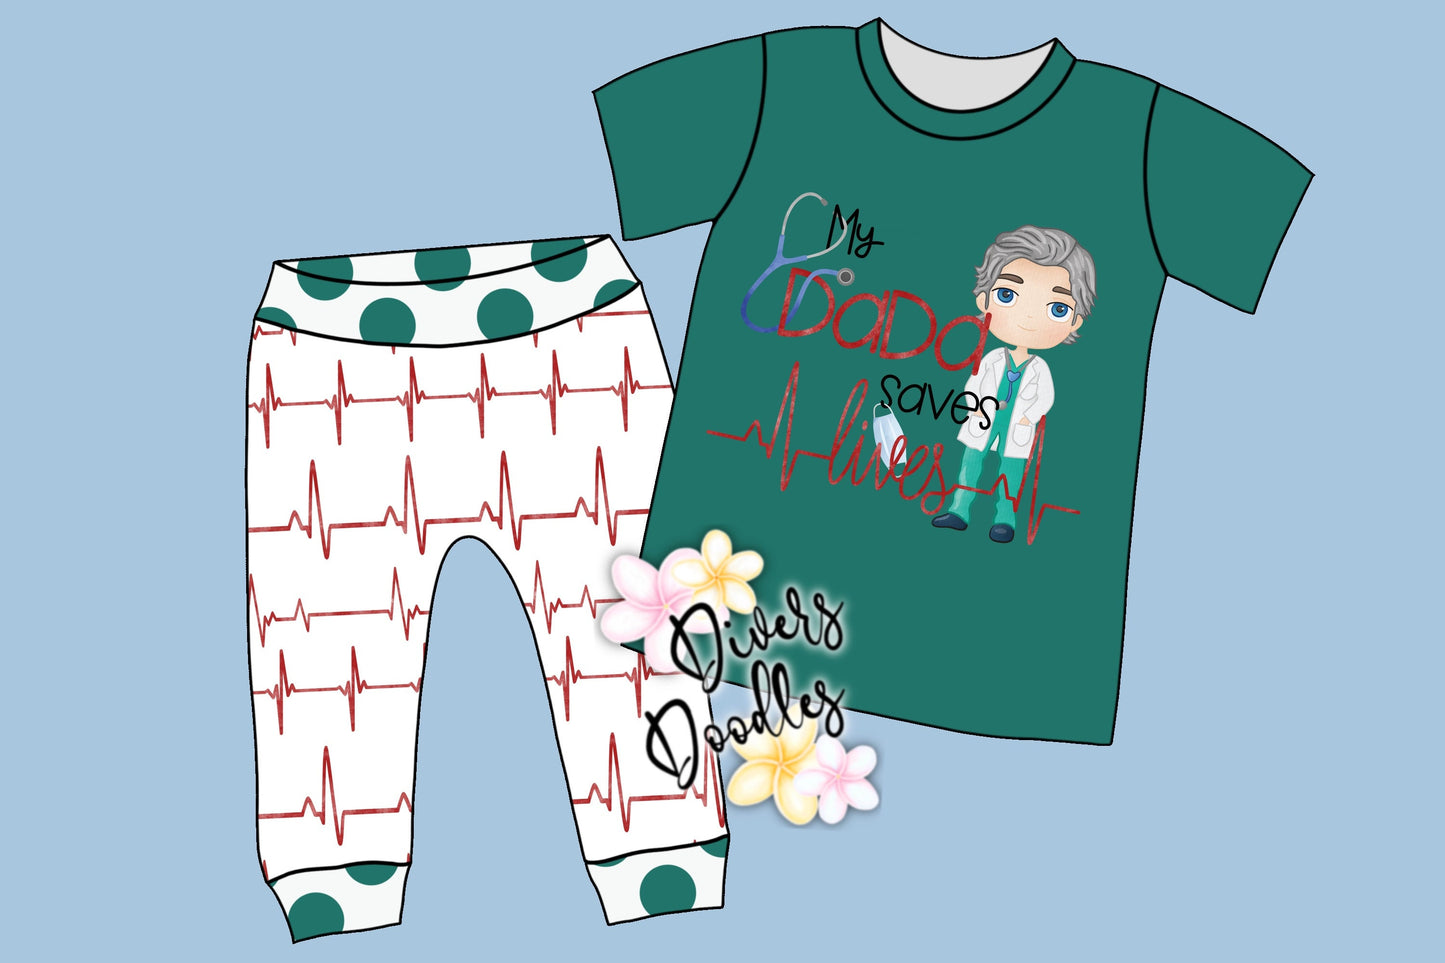 Medical PNG Files for Tshirts, Sublimation Designs for Kids, Commercial Use PNG, Daddy PNG, Doctor Illustration, Waterslide Digital Download